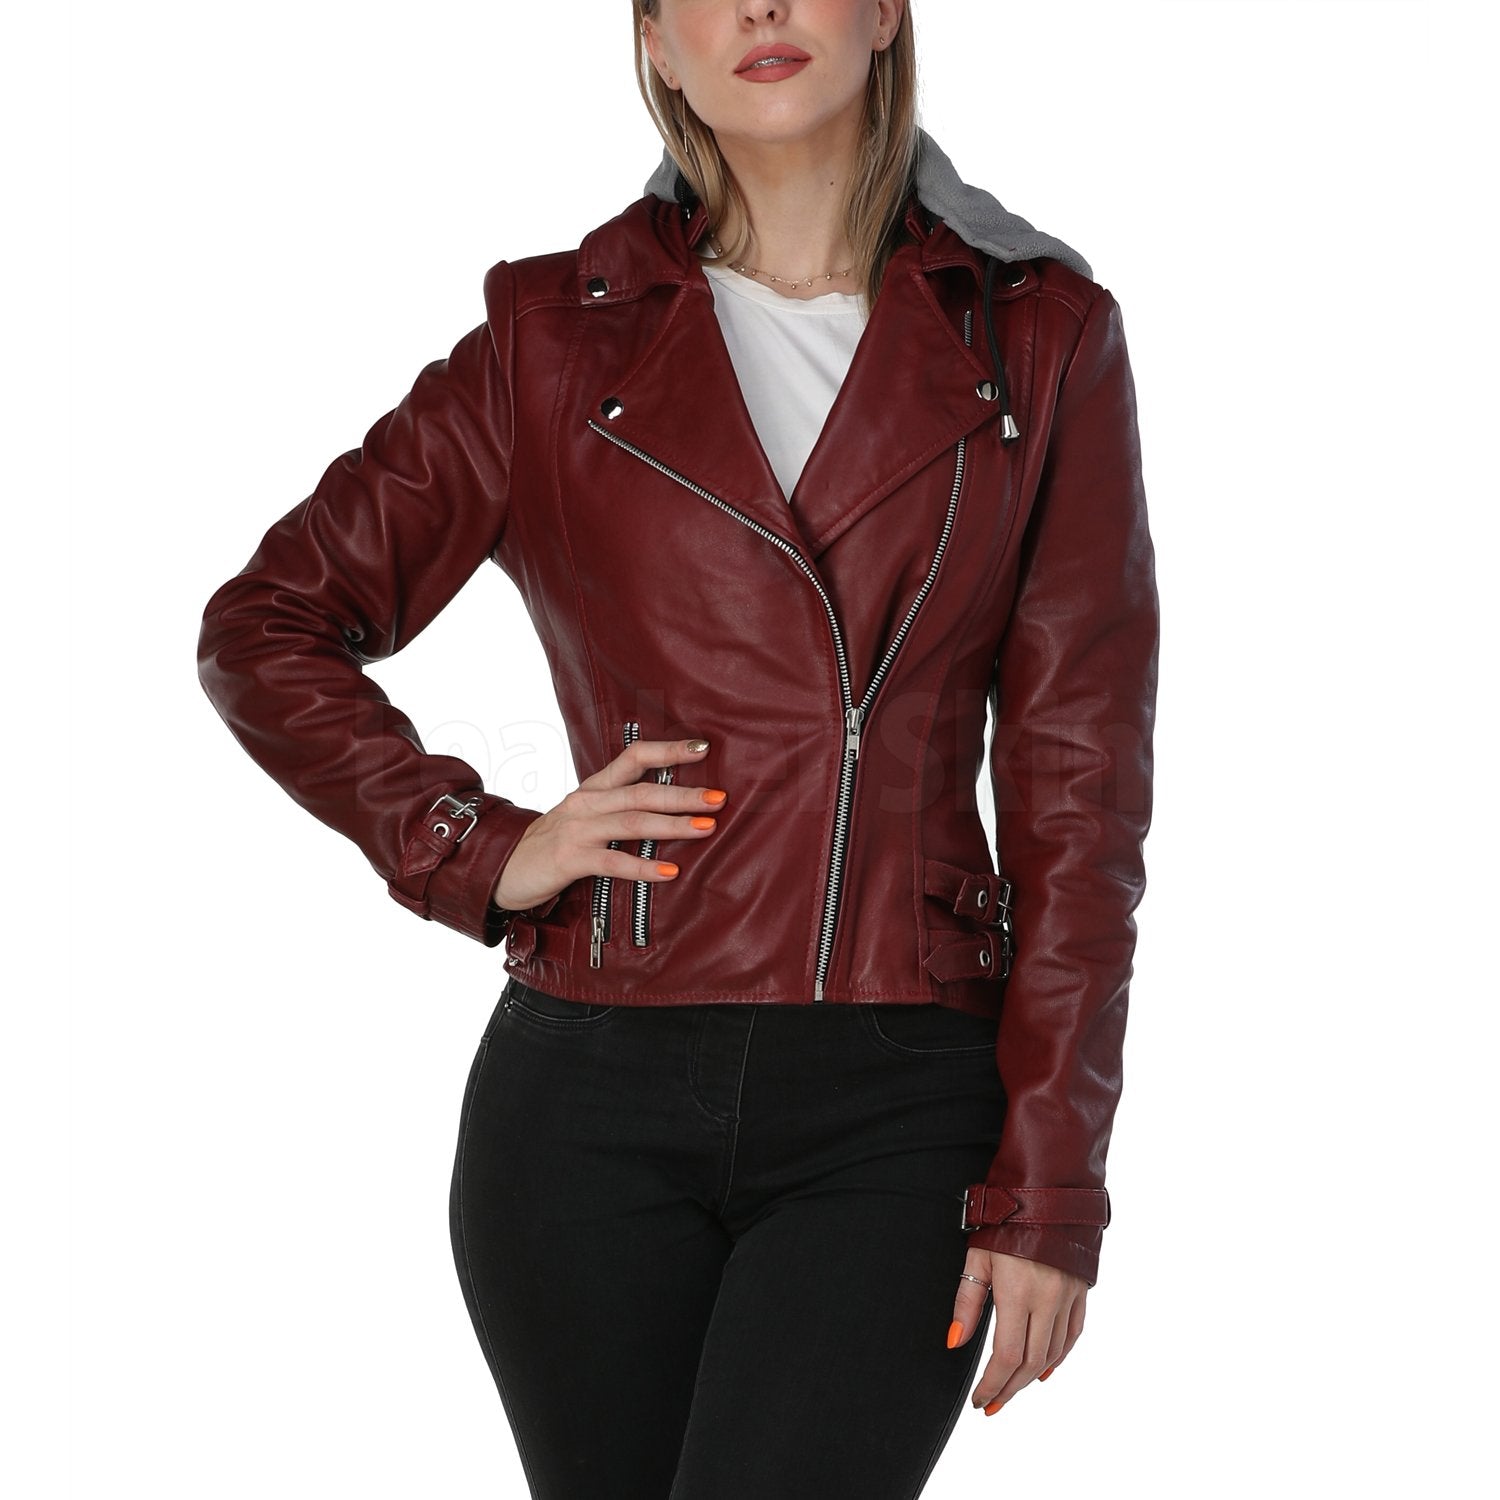 Buy Womens Soldier 76 Crop Top Leather Jacket